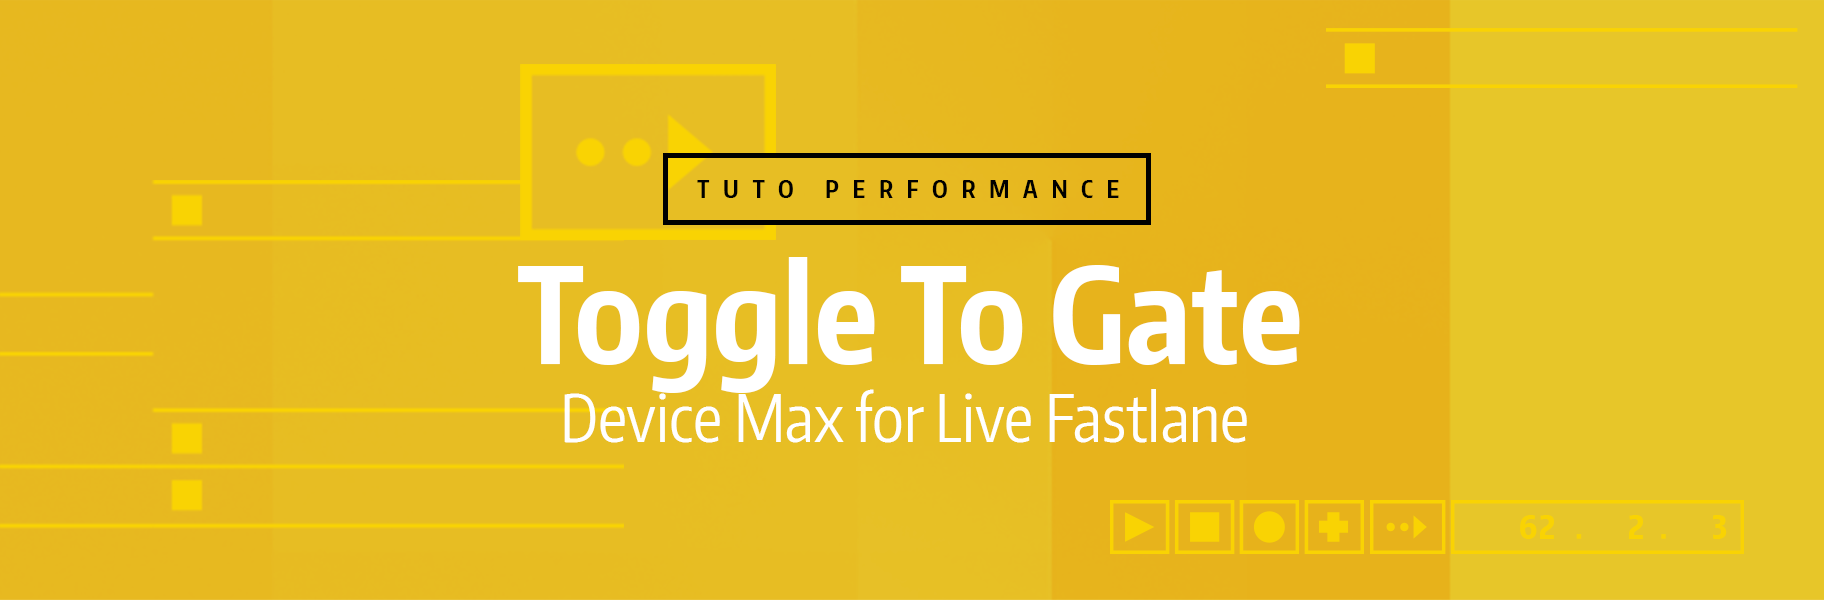 Tutoriel Ableton Live - Toggle To Gate (Device Max for Live Fastlane)